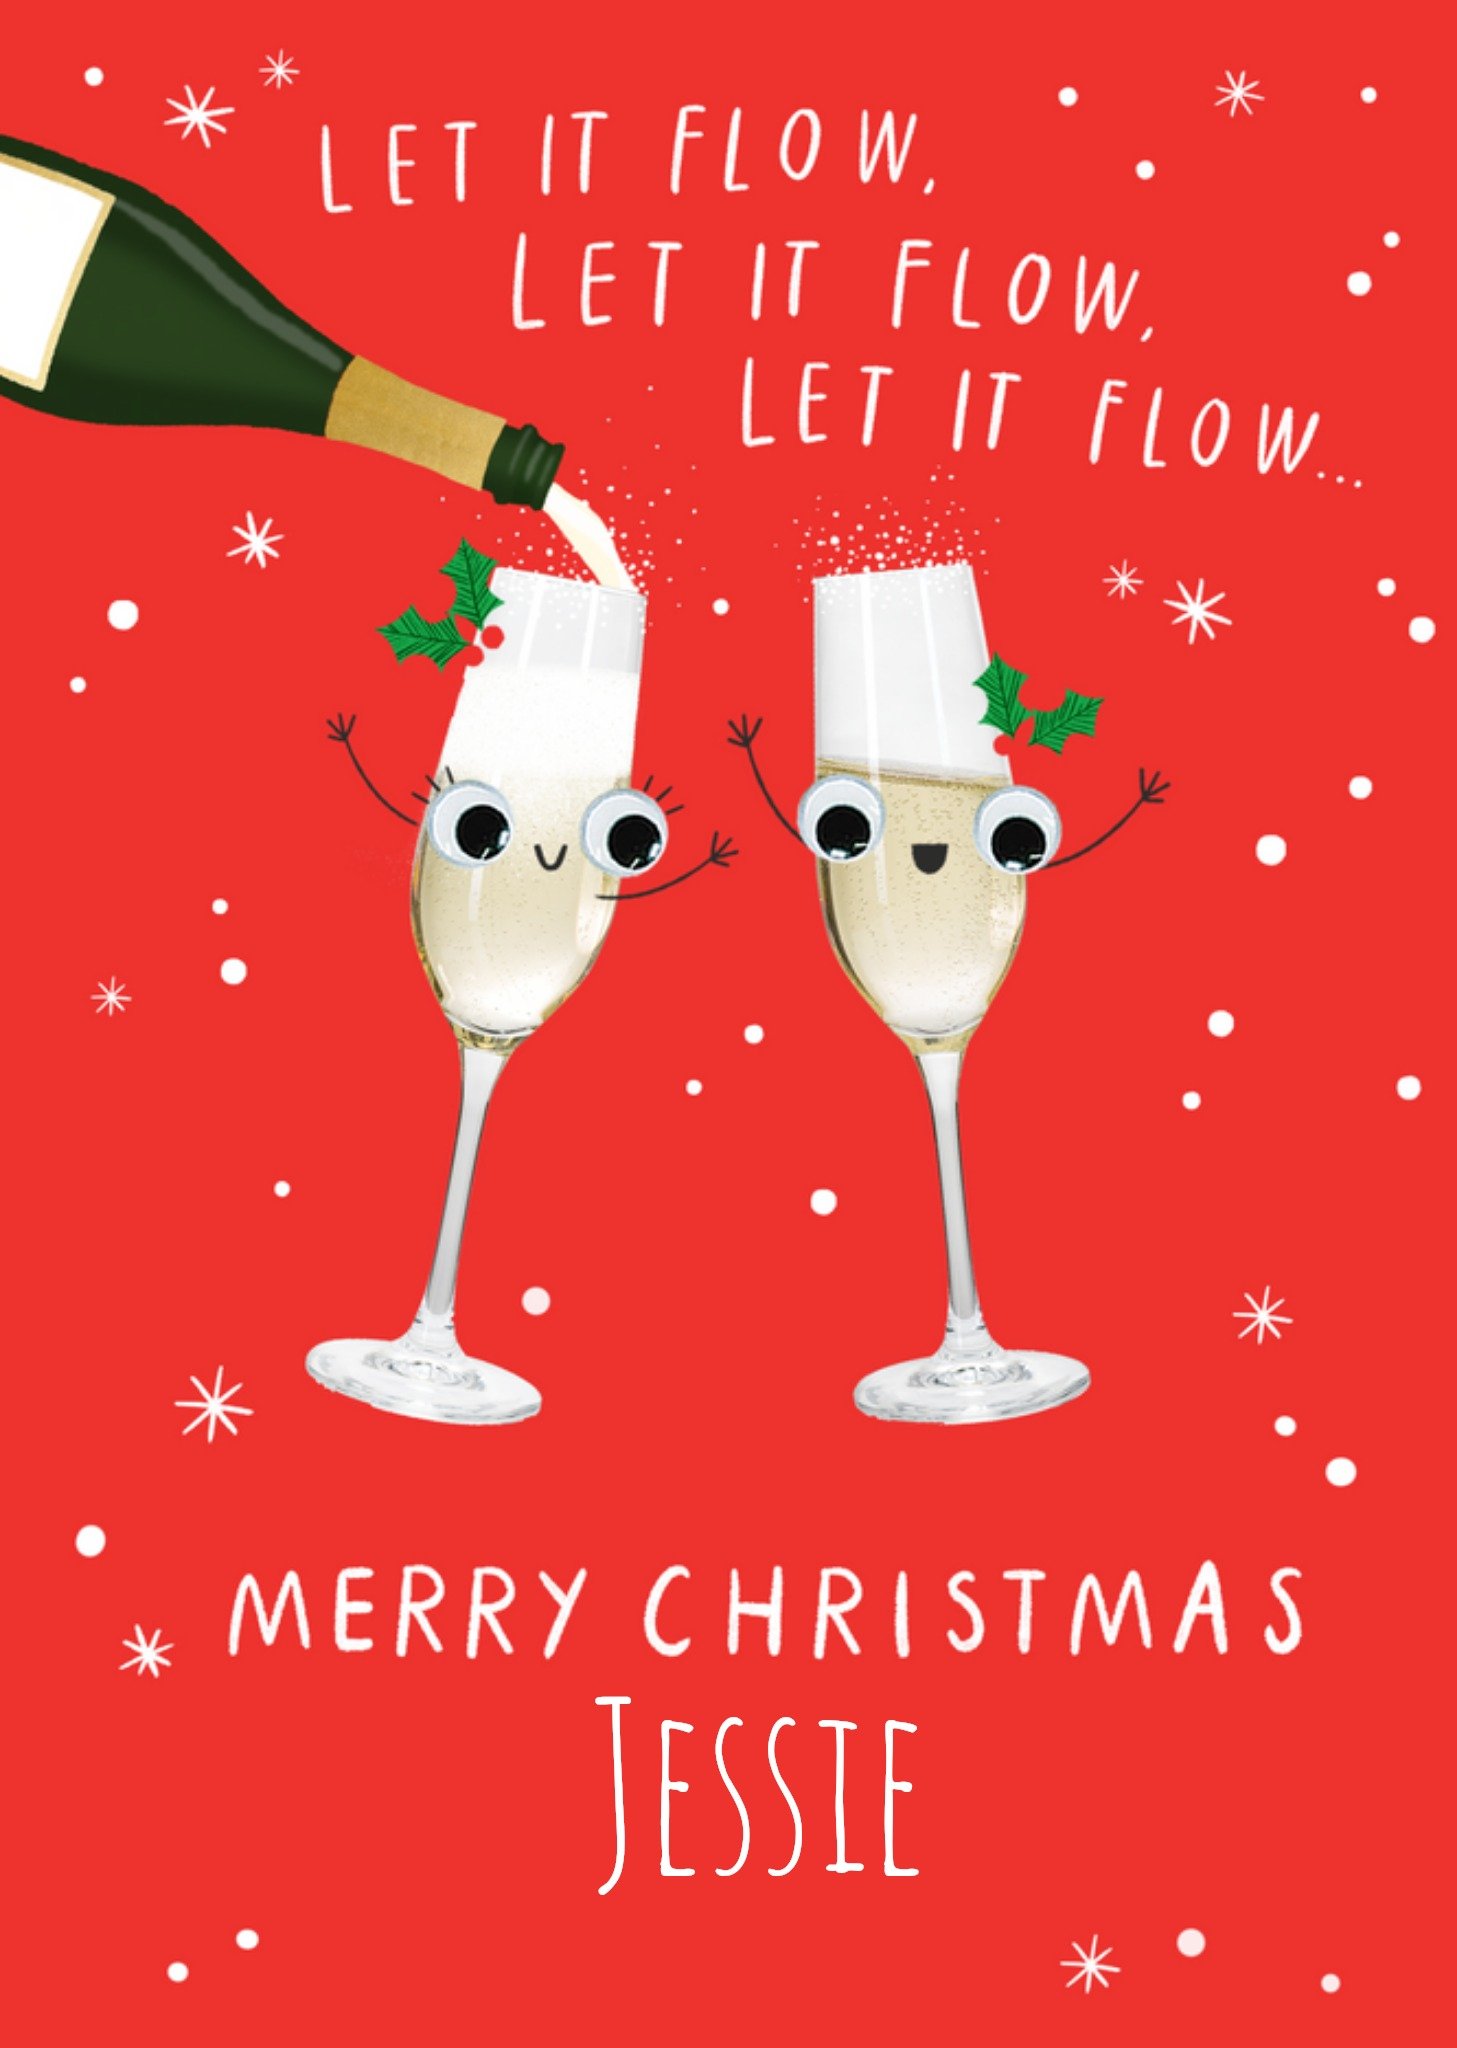 Moonpig Let It Flow, Let It Flow, Let It Flow... Christmas Card Ecard